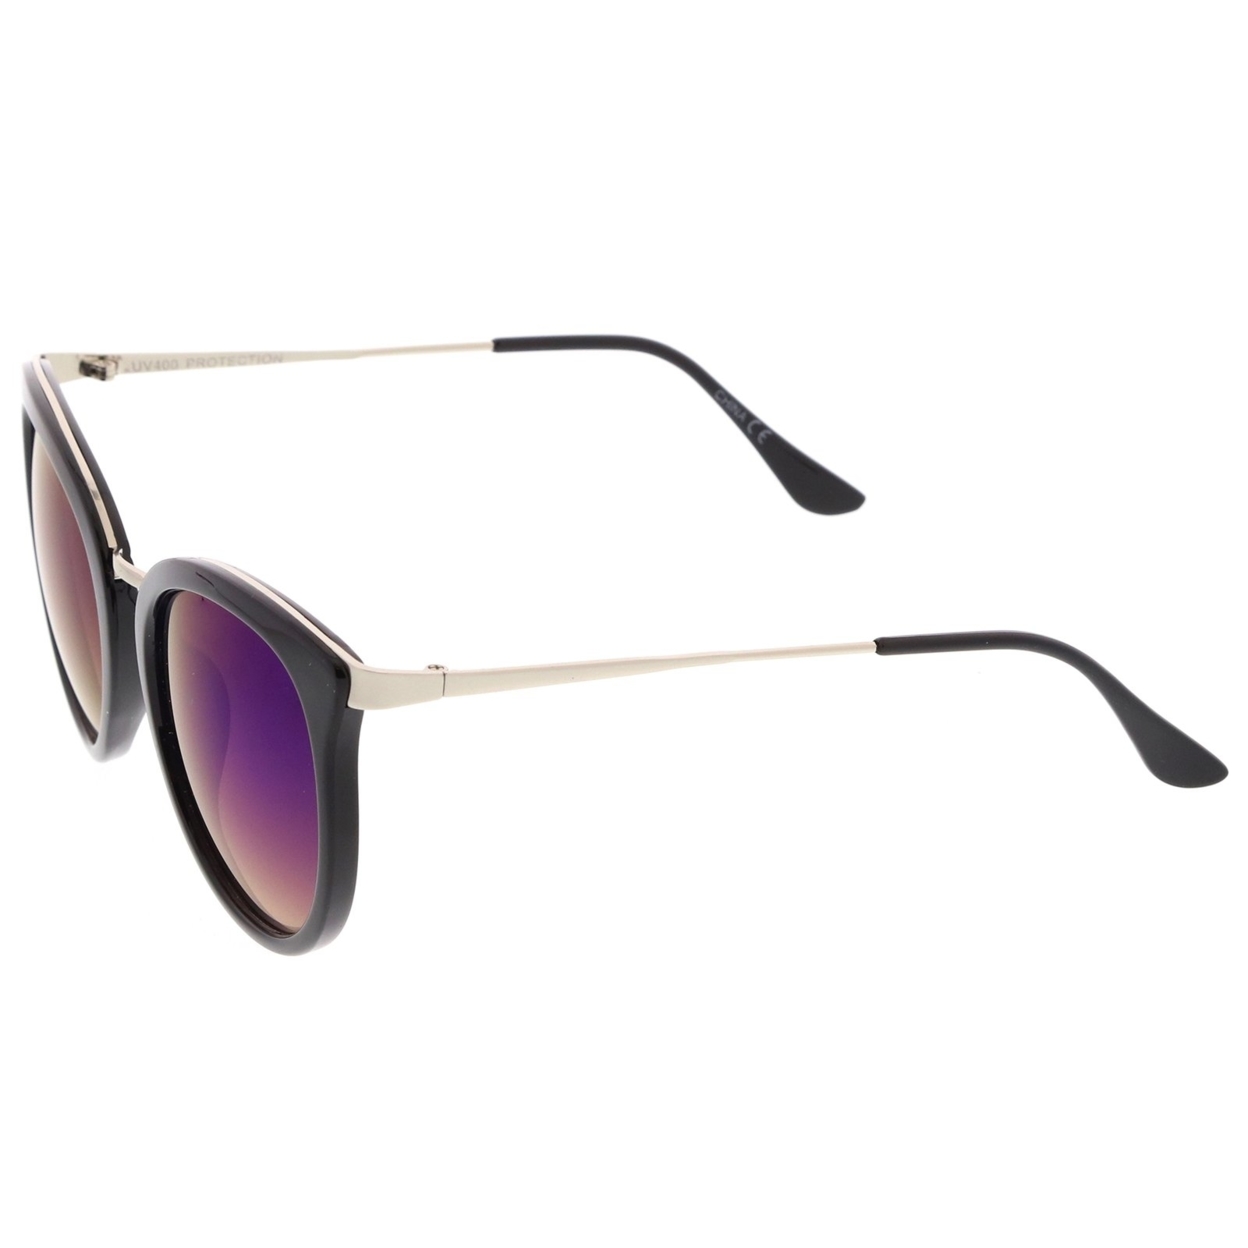 Modern Slim Metal Temple Colored Mirror Lens Cat Eye Sunglasses 54mm - Tortoise-Gold / Pink-Green Mirror